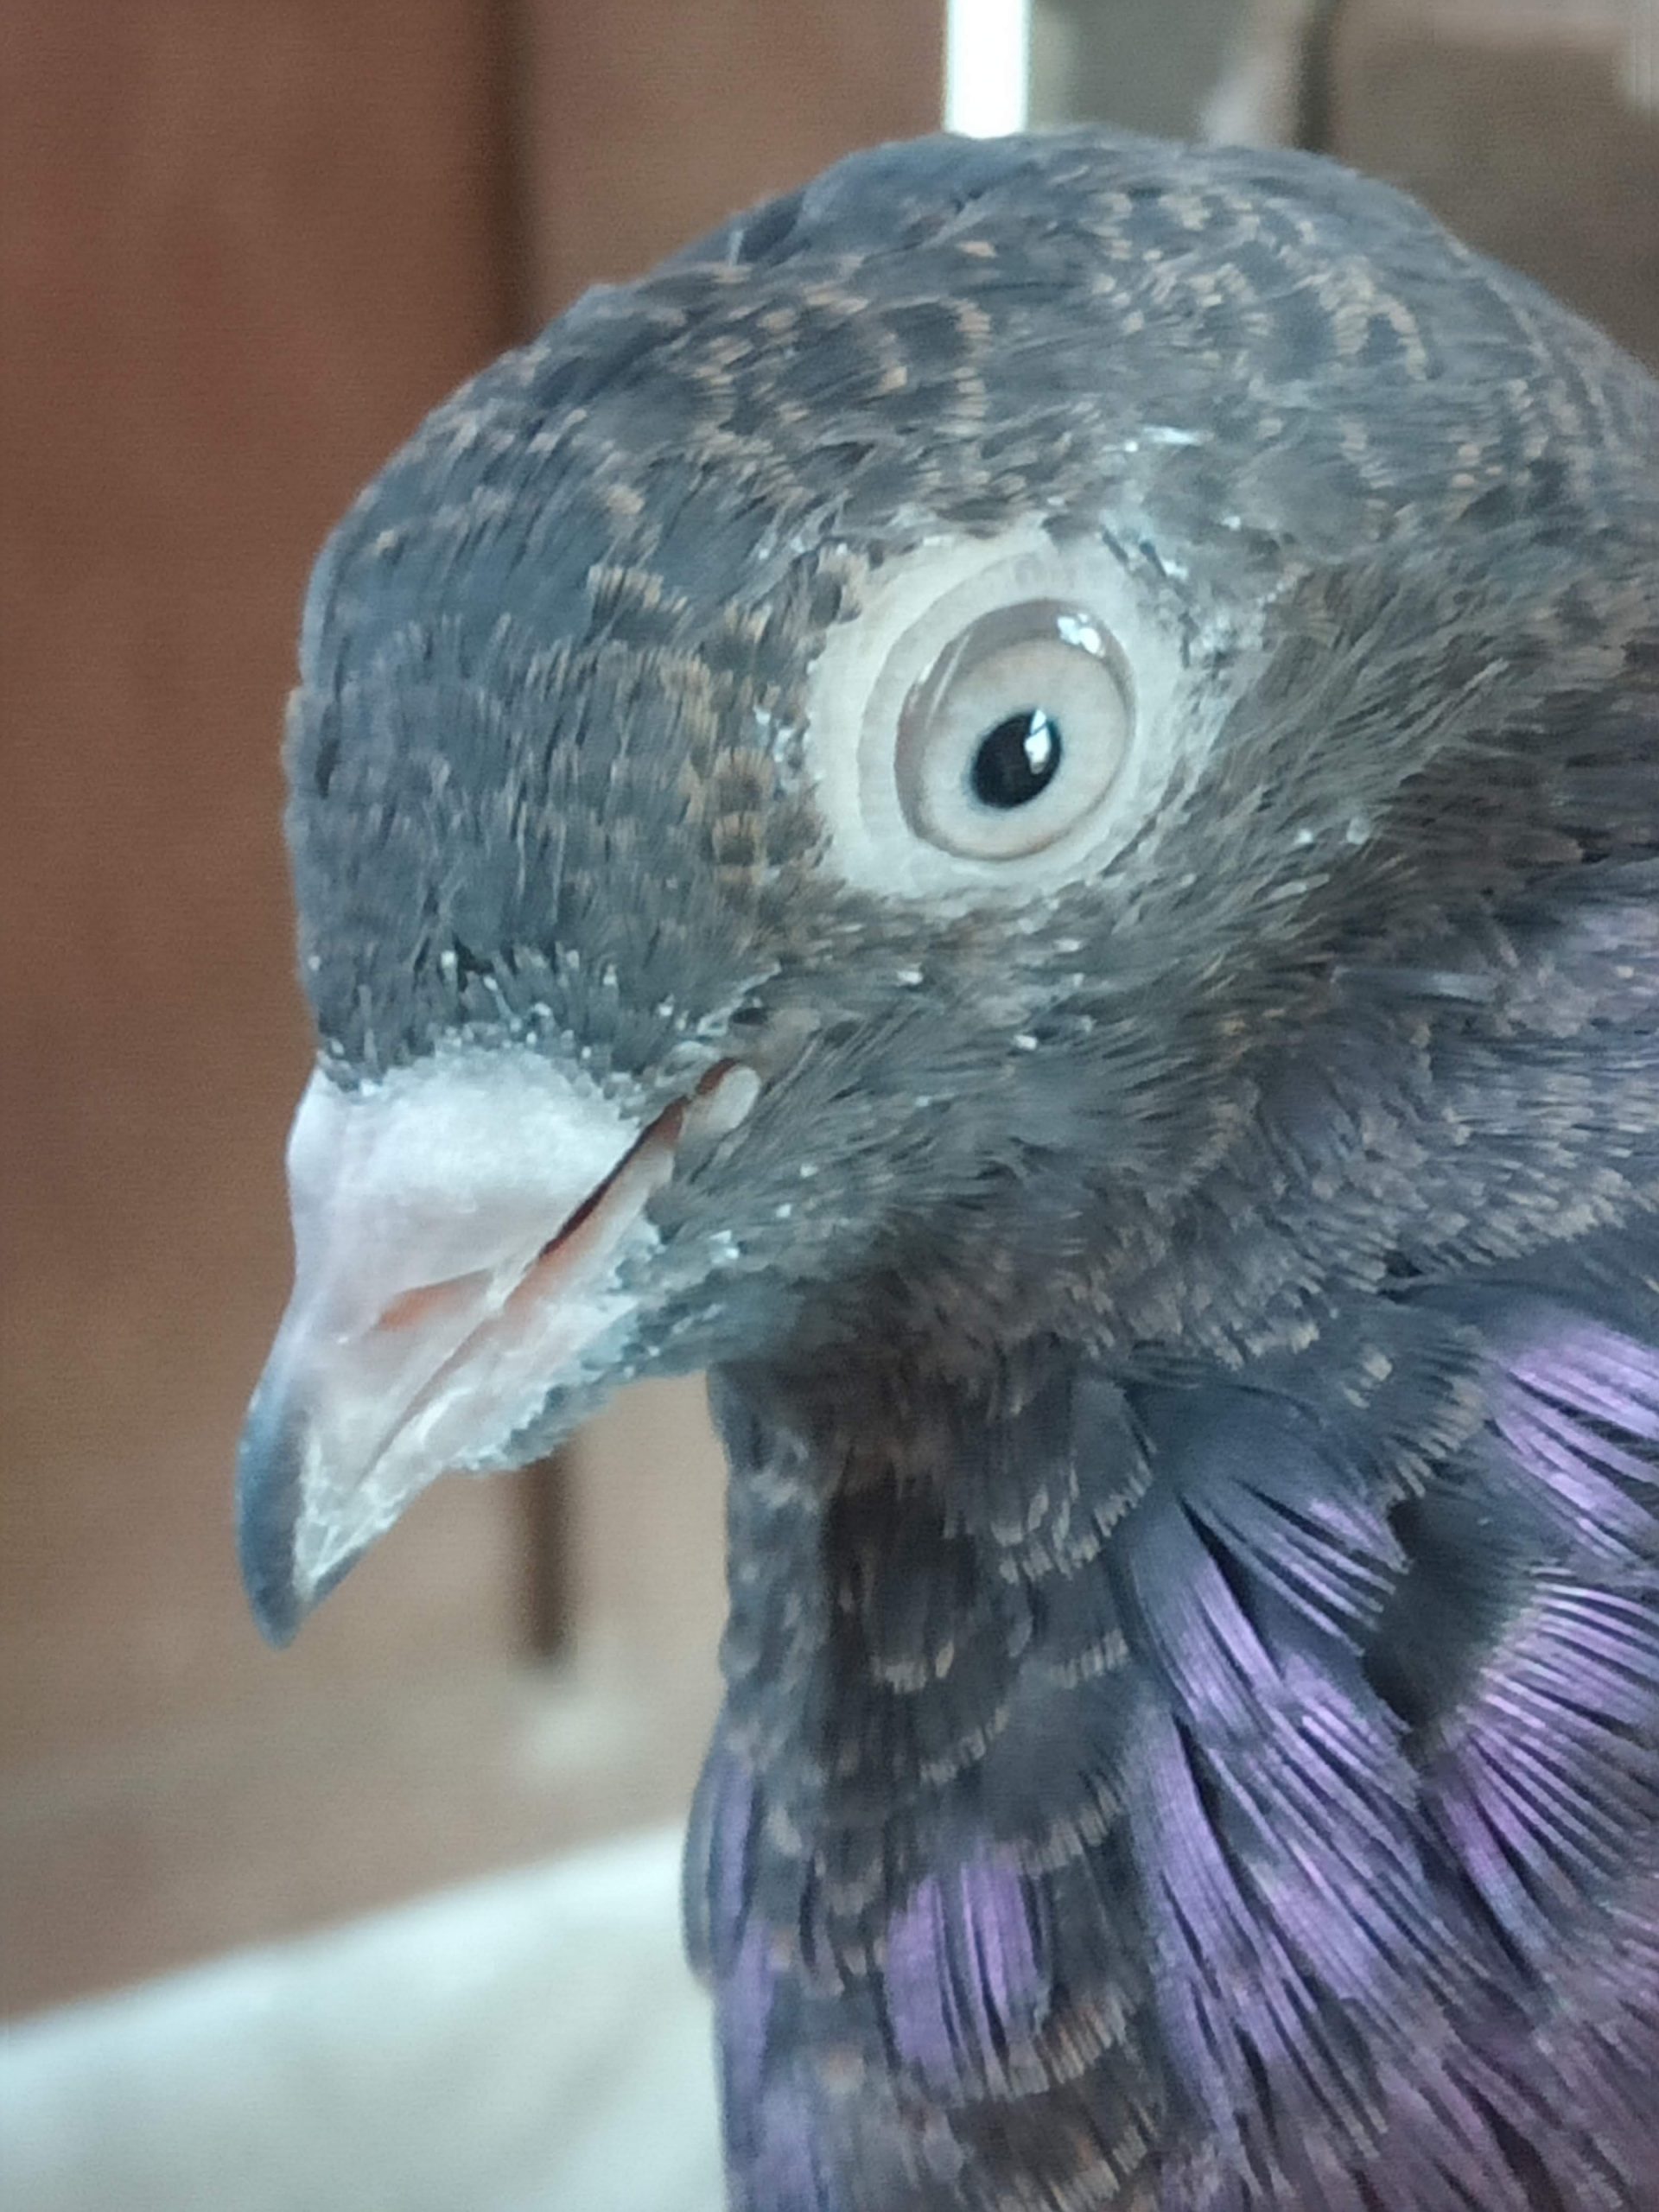 close up of pigeon